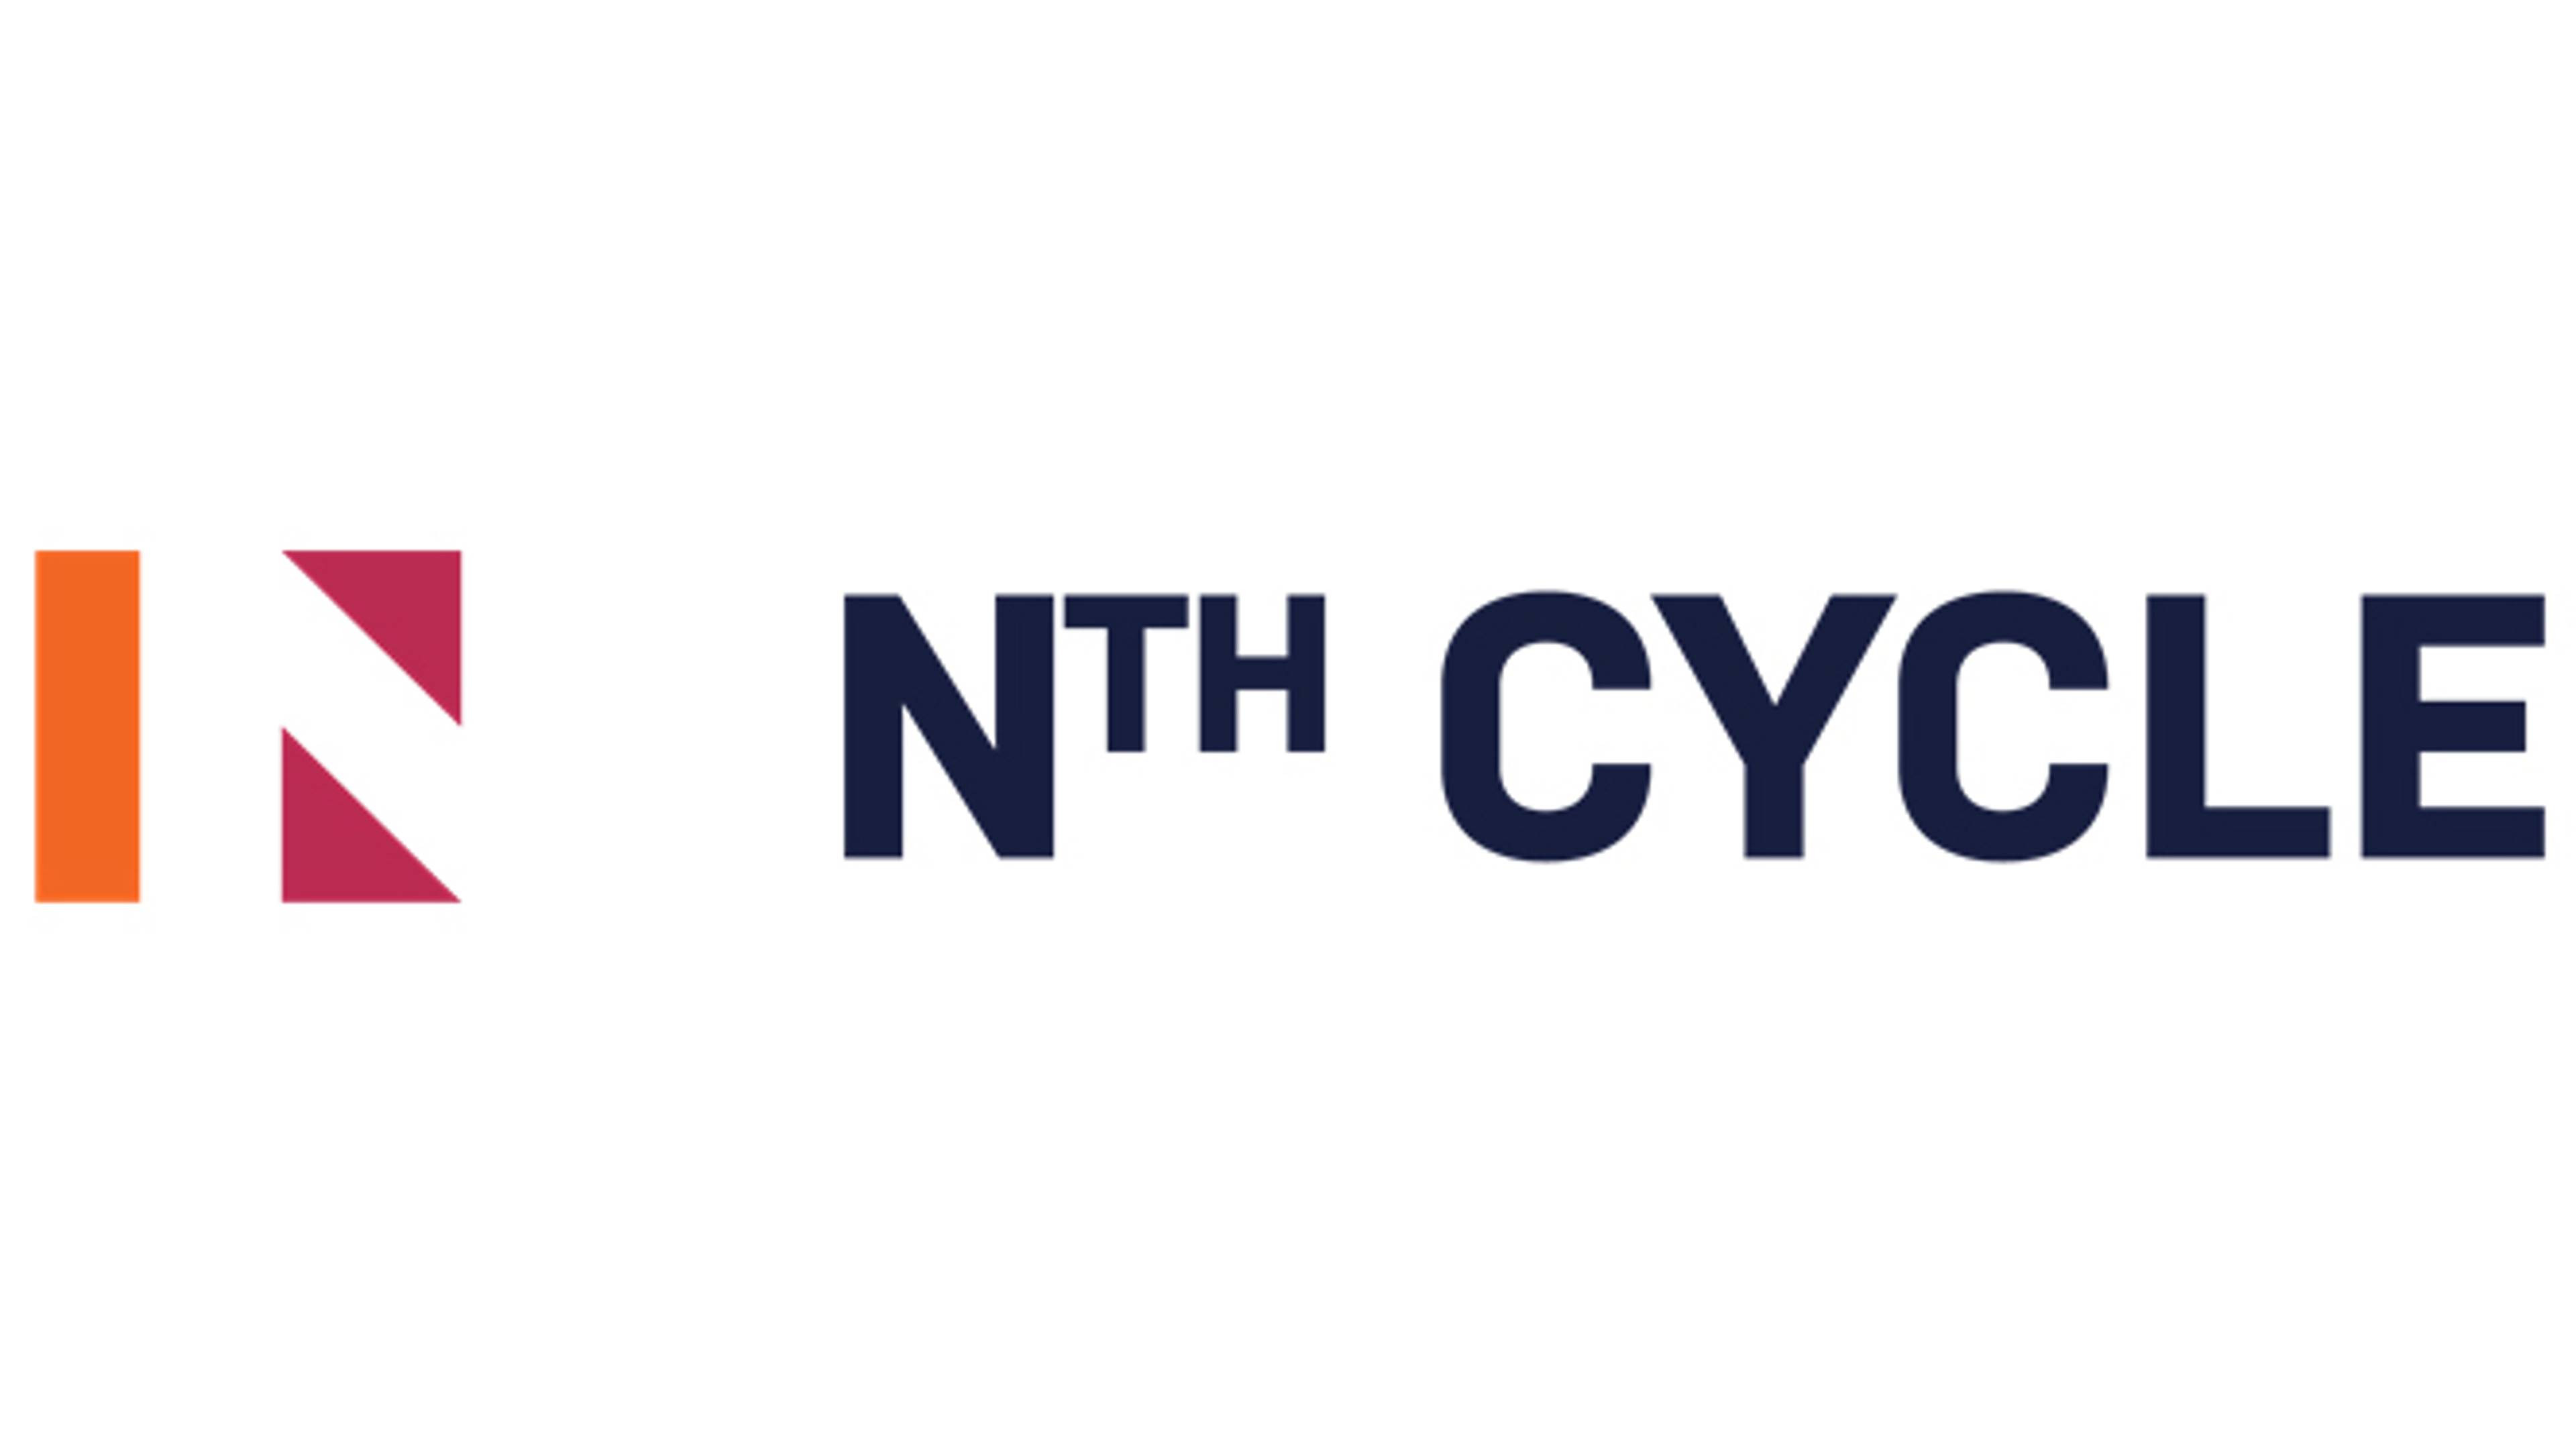 Nth cycle logo